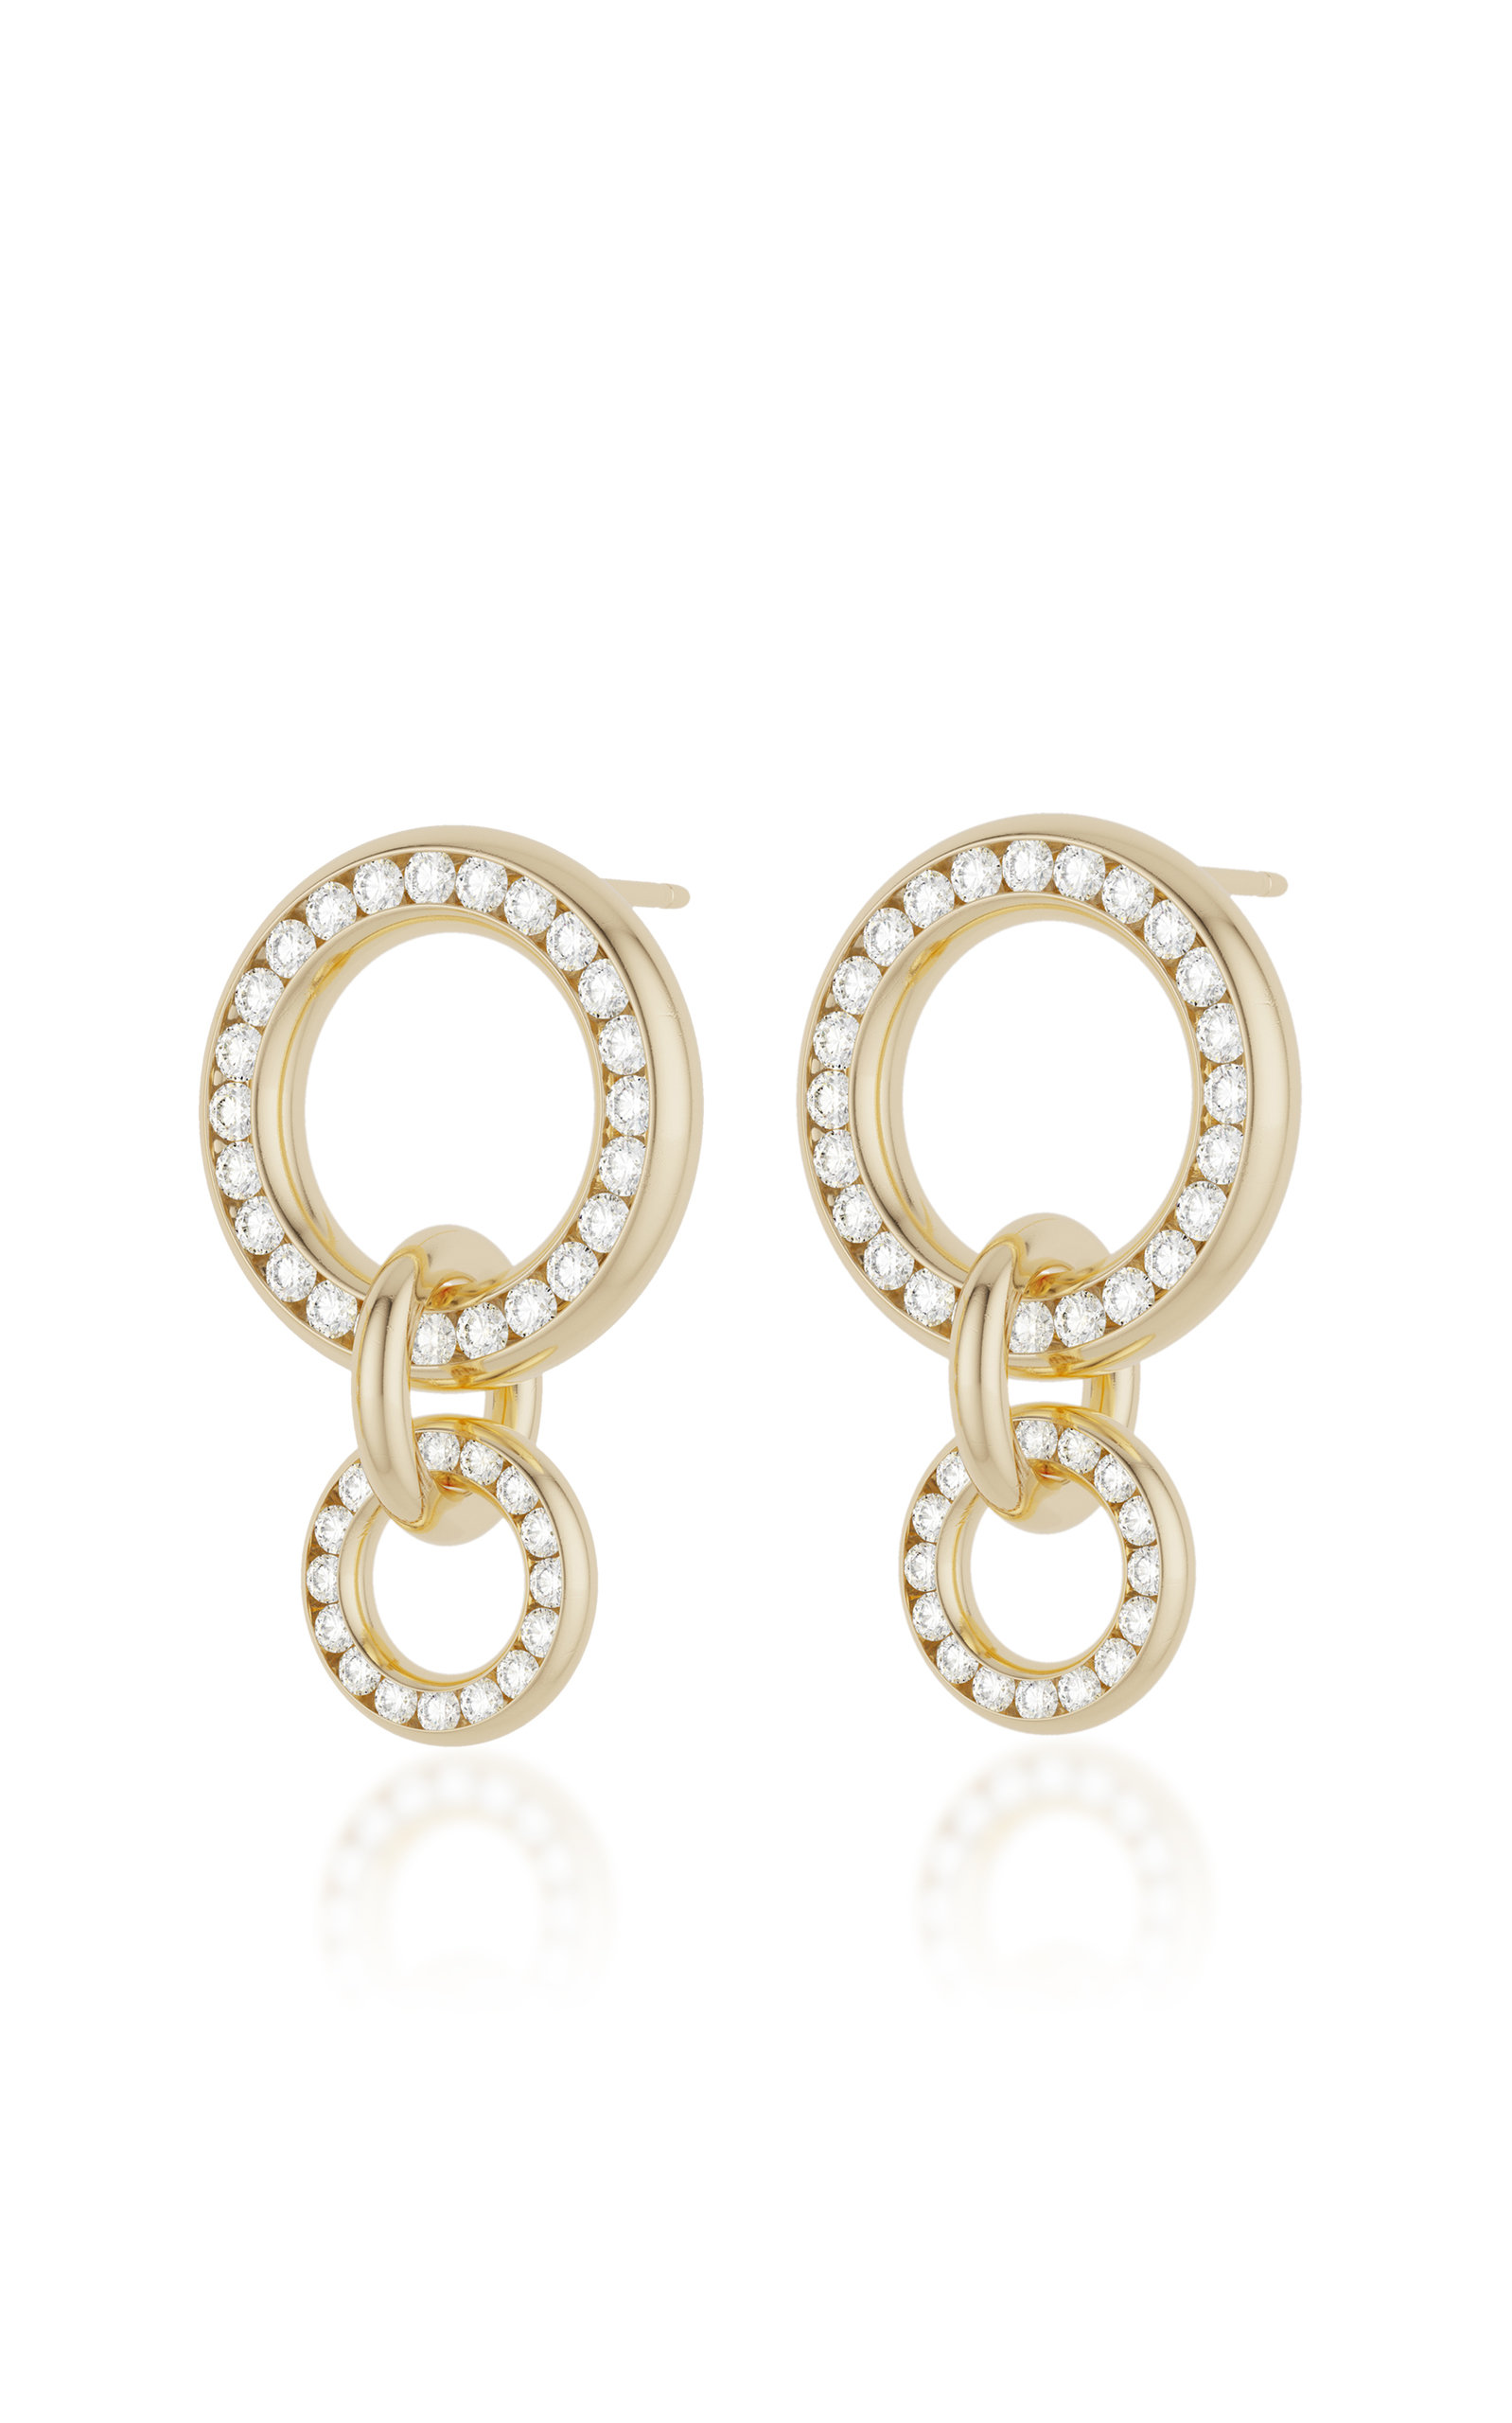 SPINELLI KILCOLLIN WOMEN'S CANIS 18K YELLOW GOLD DIAMOND EARRINGS